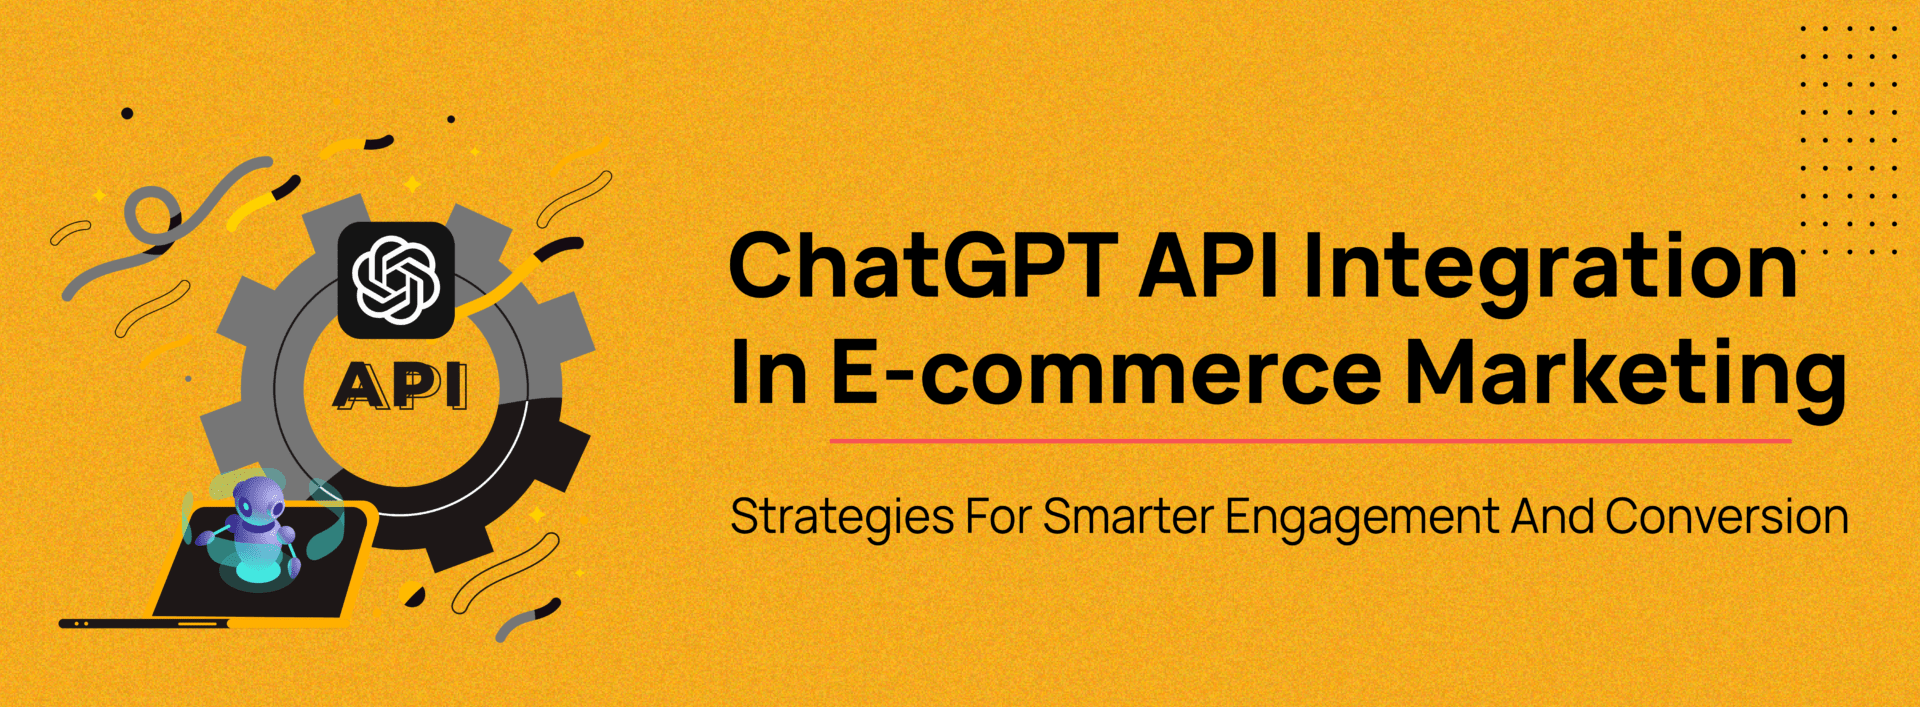 ChatGPT API Integration In E-commerce Marketing